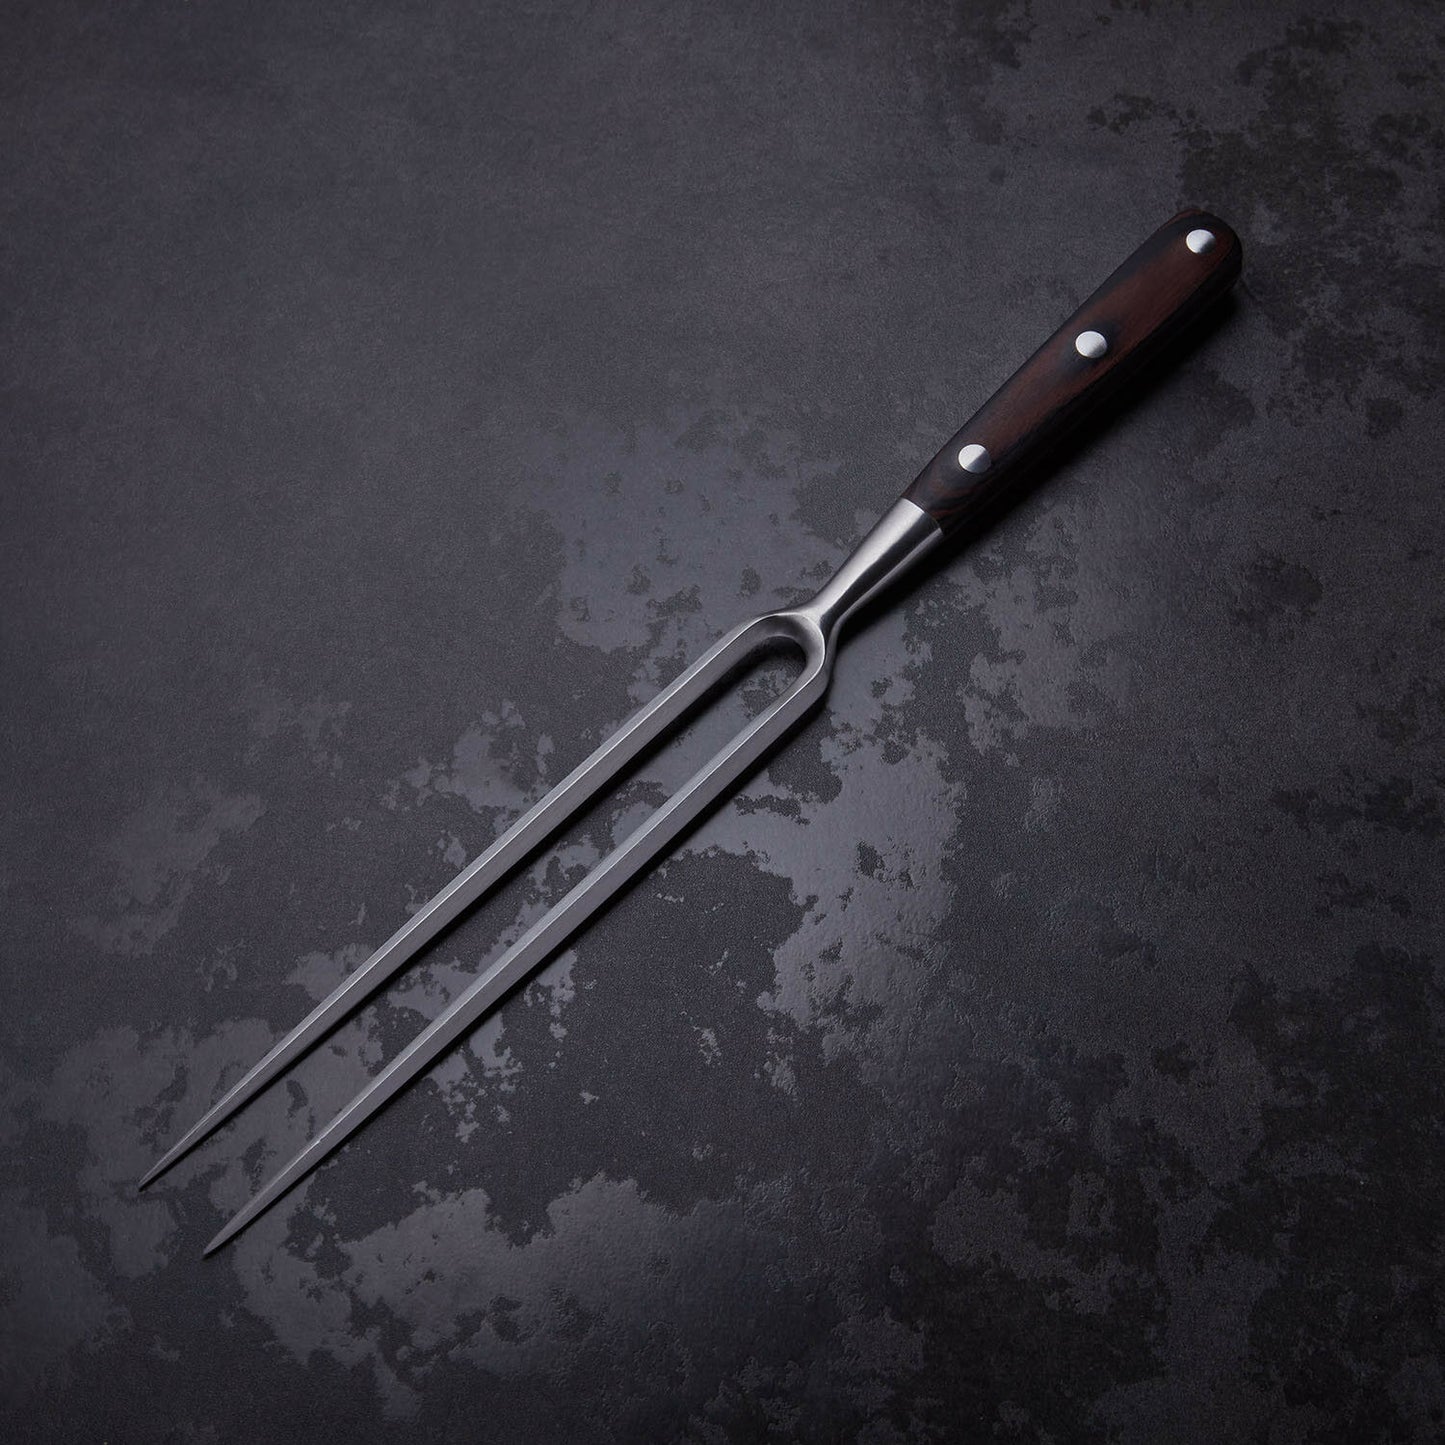 Sternsteiger 7pcs damascus knife set japanese damascus steel VG-10 - SPITZEN-STERN GOLD SERIES